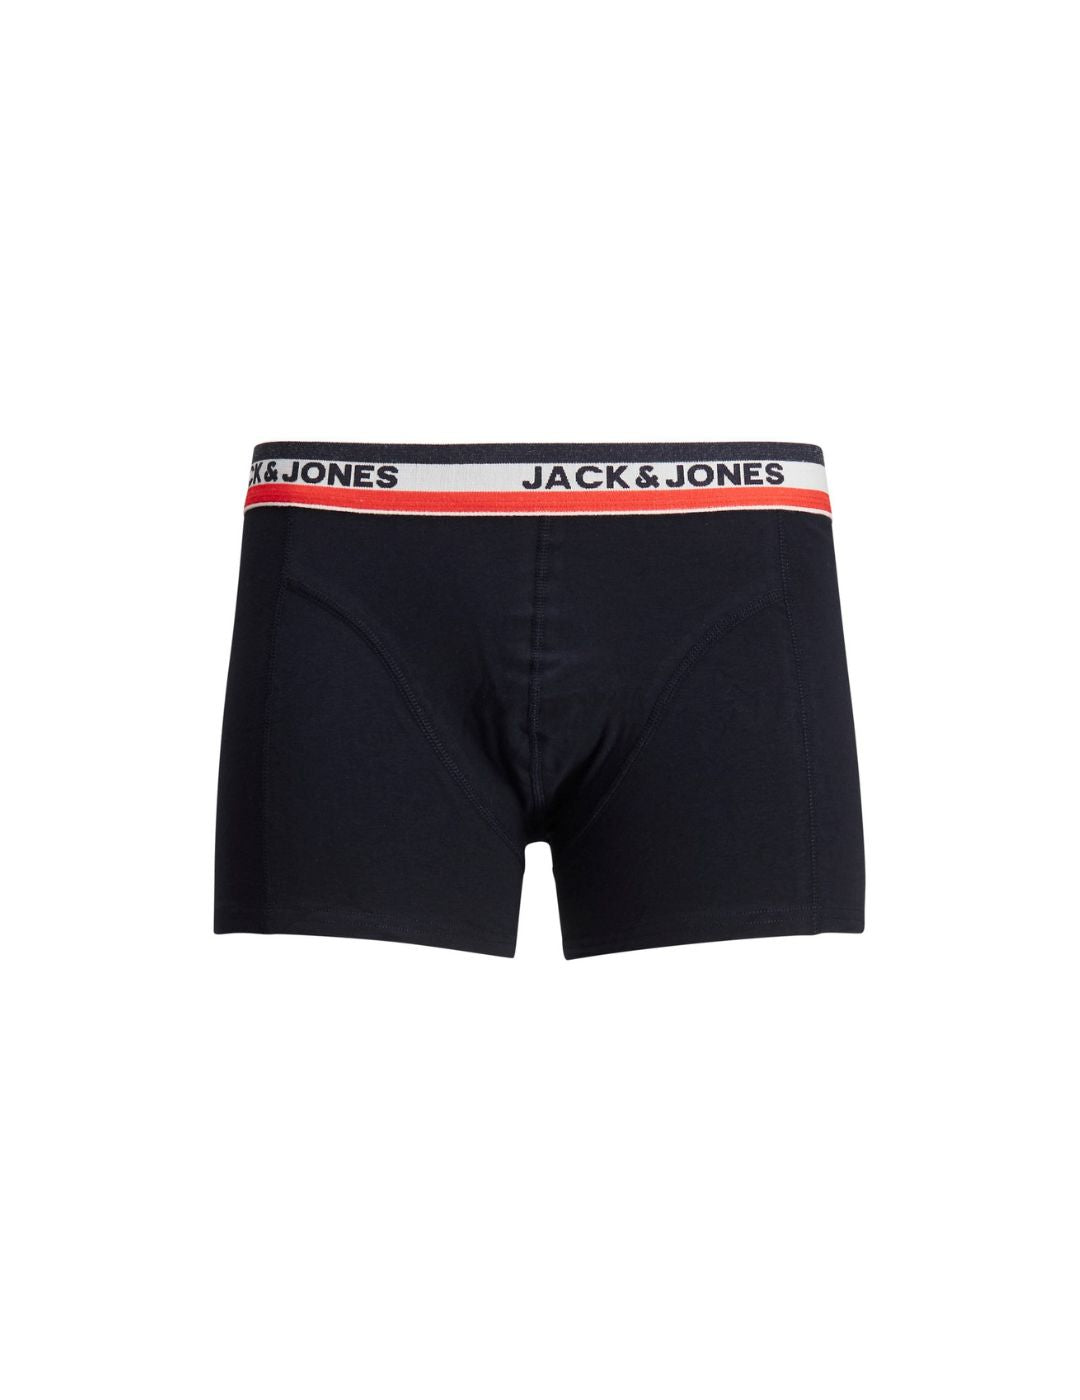 Pack de 3 Boxer Jack and Jones New Blanco-Marino-Negro - Bicos de Fío